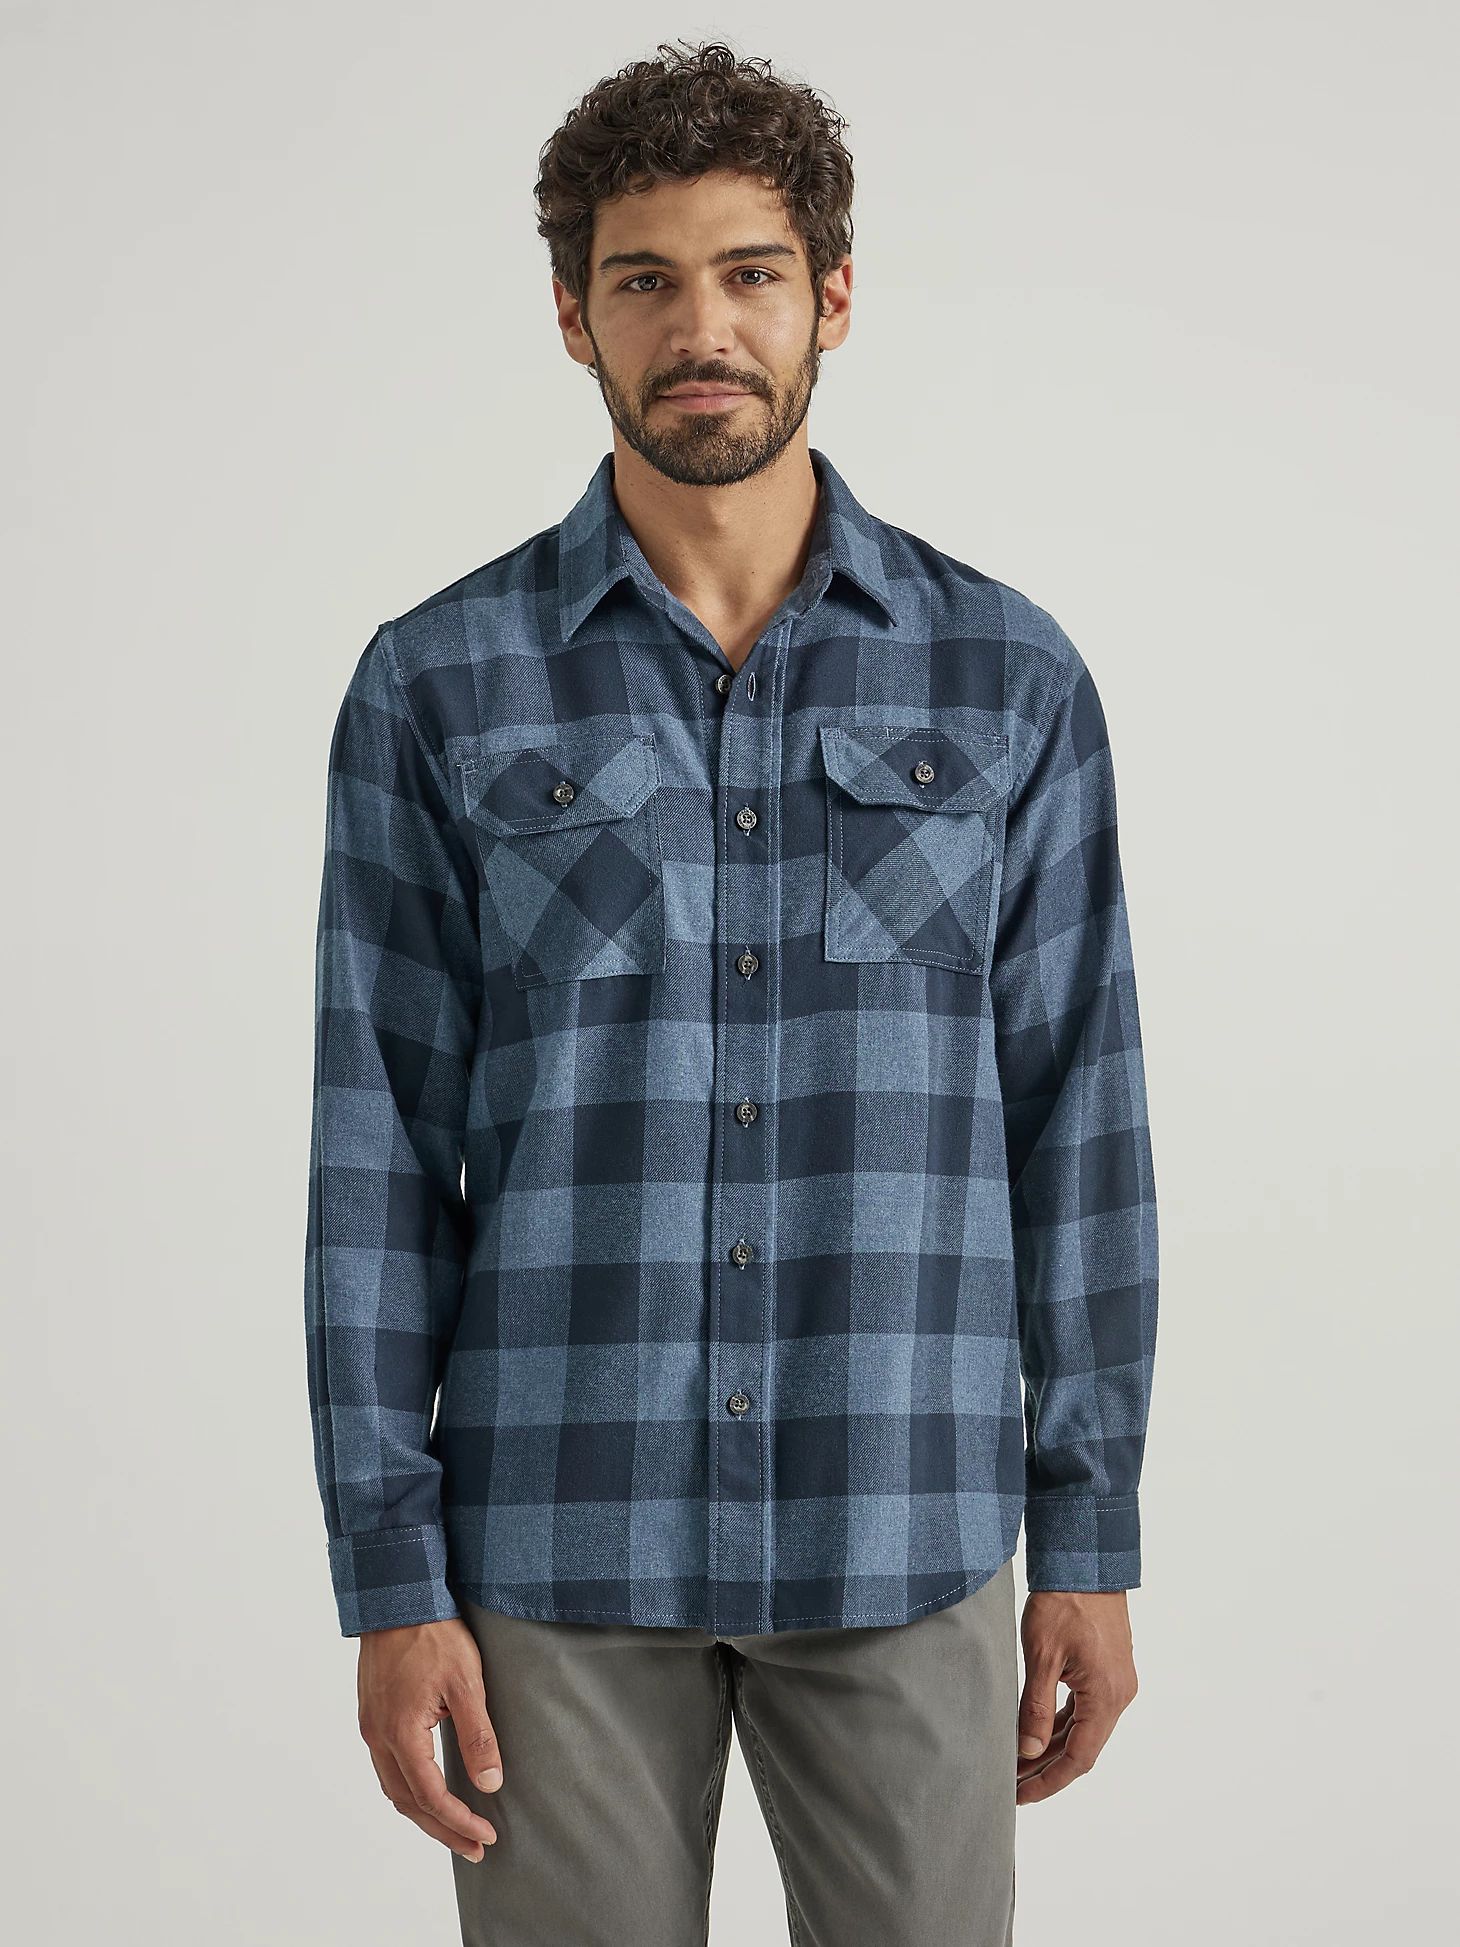 Men's Wrangler® Flannel Plaid Shirt in Sargasso Sea | Wrangler